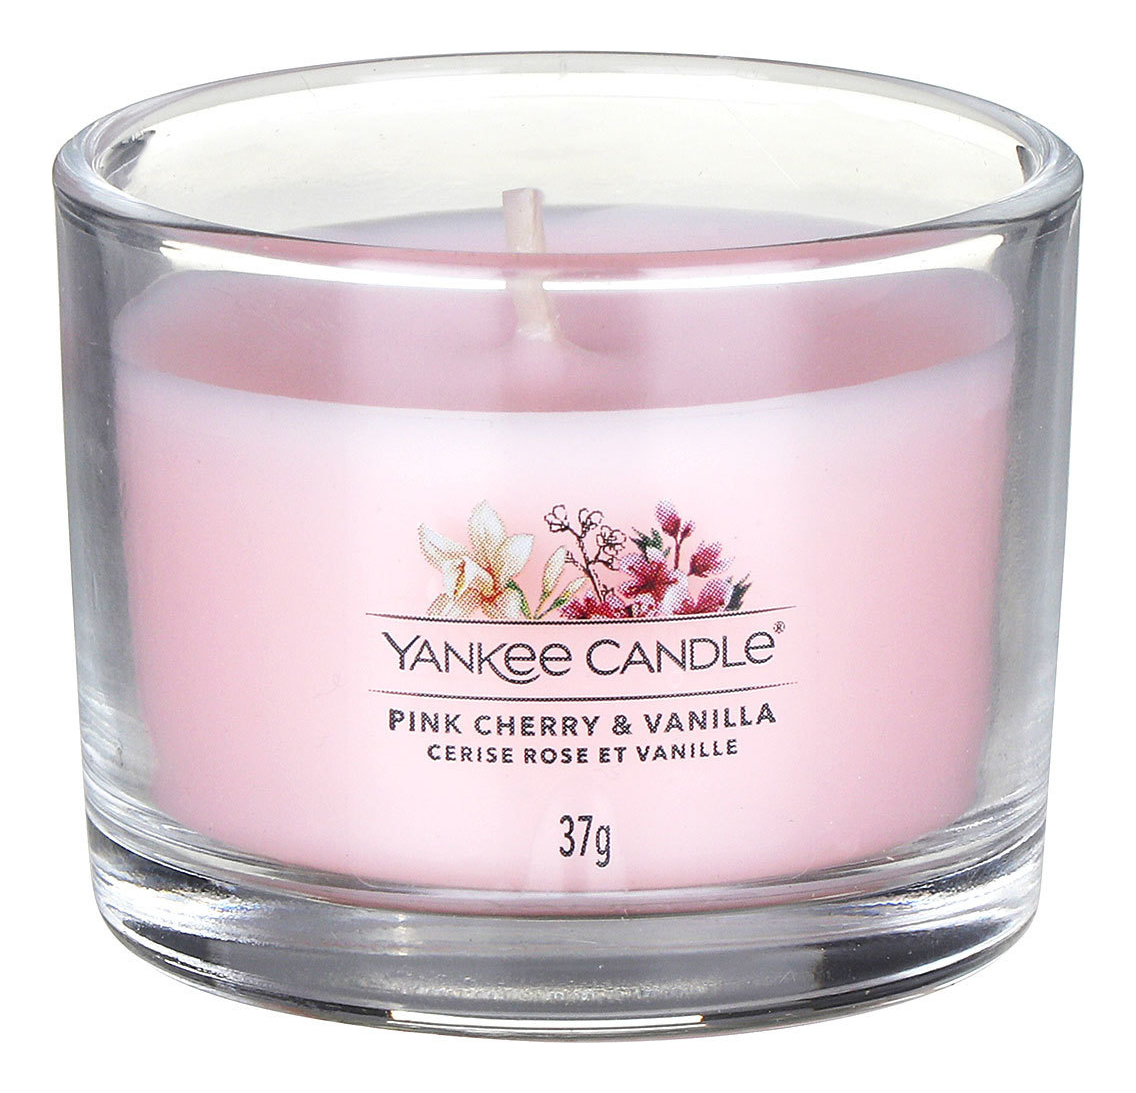 Купить Ароматическая свеча Pink Cherry & Vanilla: свеча 37г, Ароматическая свеча Pink Cherry & Vanilla, Yankee Candle